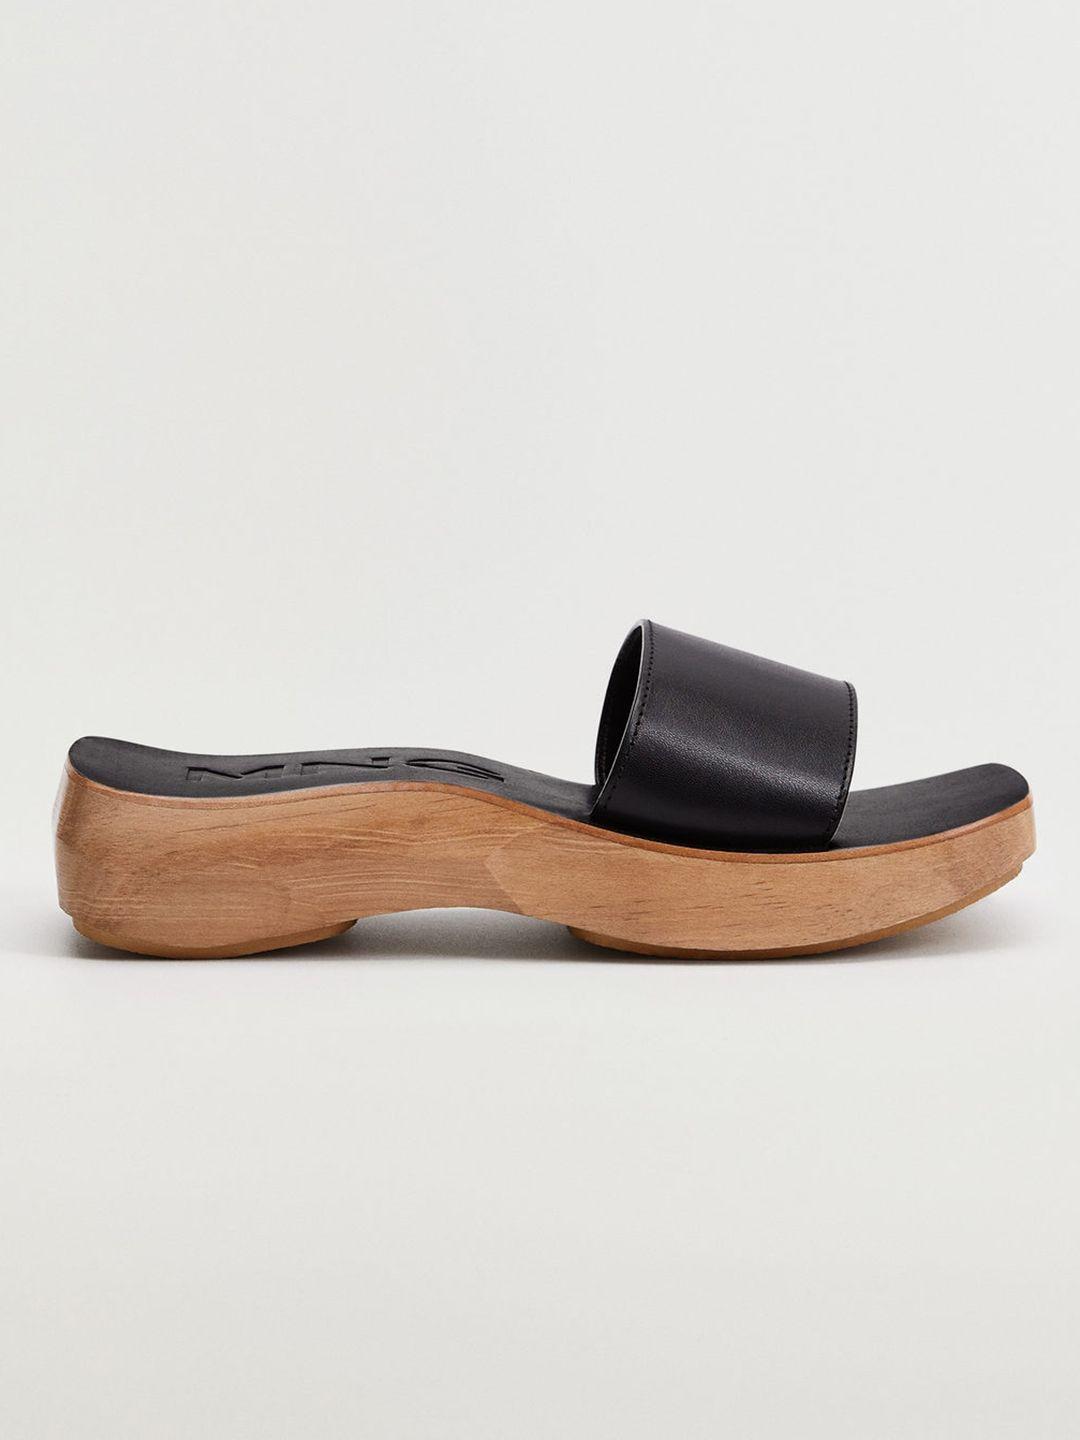 mango women black leather wood style platform heels